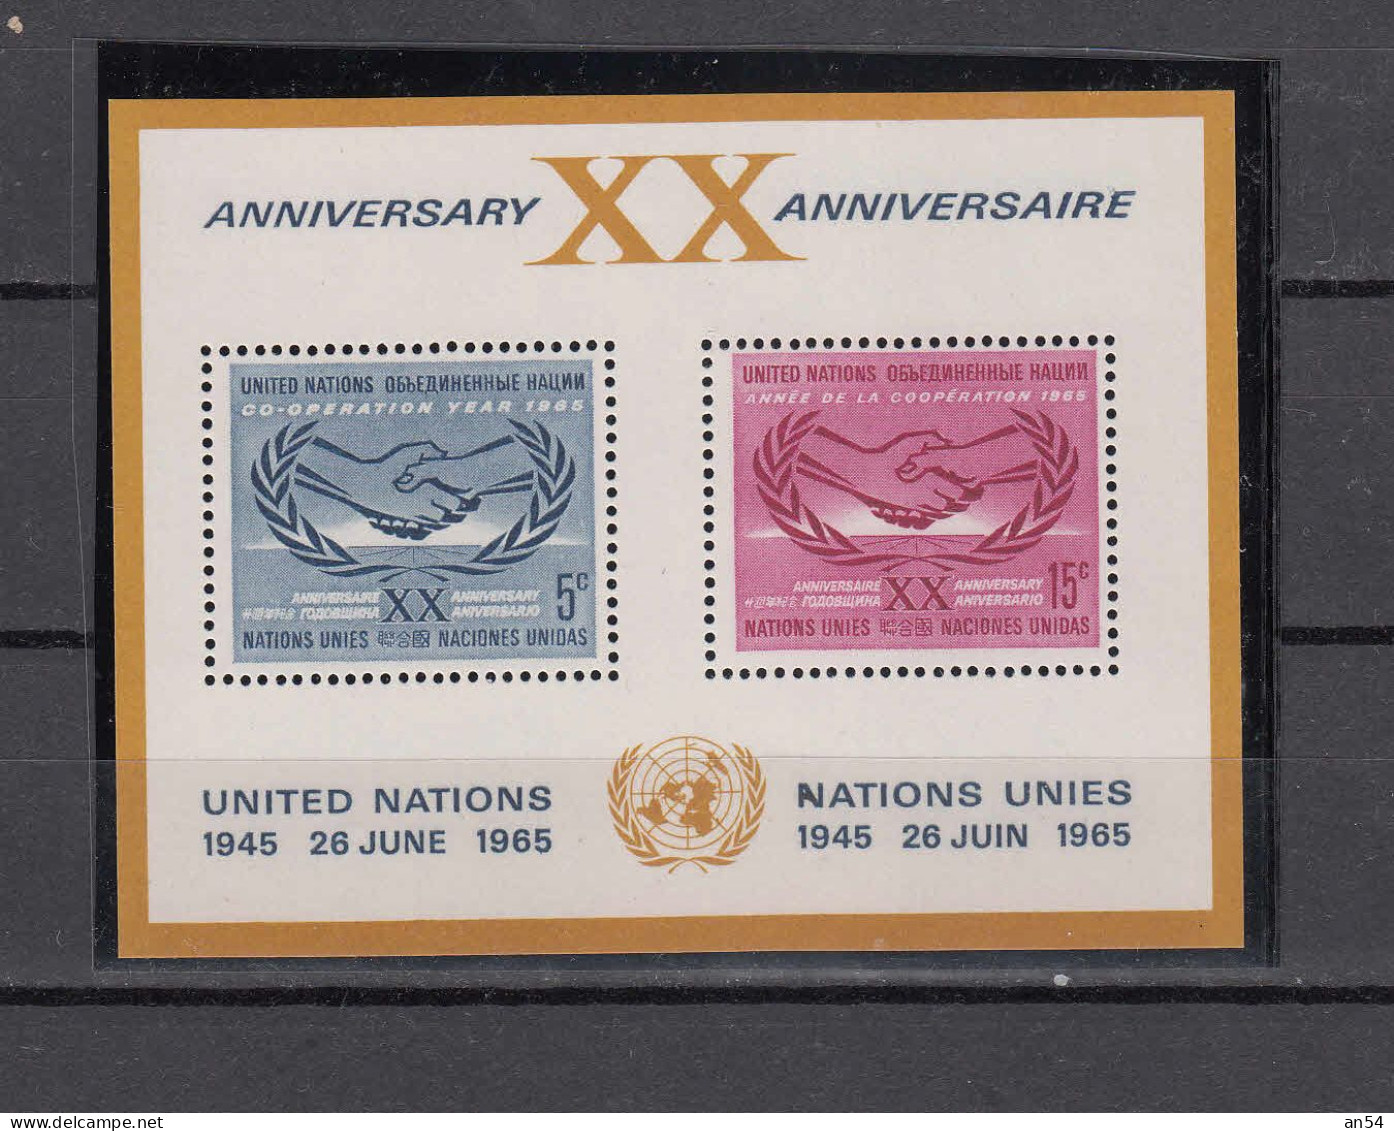 NATIONS  UNIES  NEW-YORK     1965  N° 133 à 147 + BLOC N° 3   NEUFS**   CATALOGUE YVERT&TELLIER - Unused Stamps